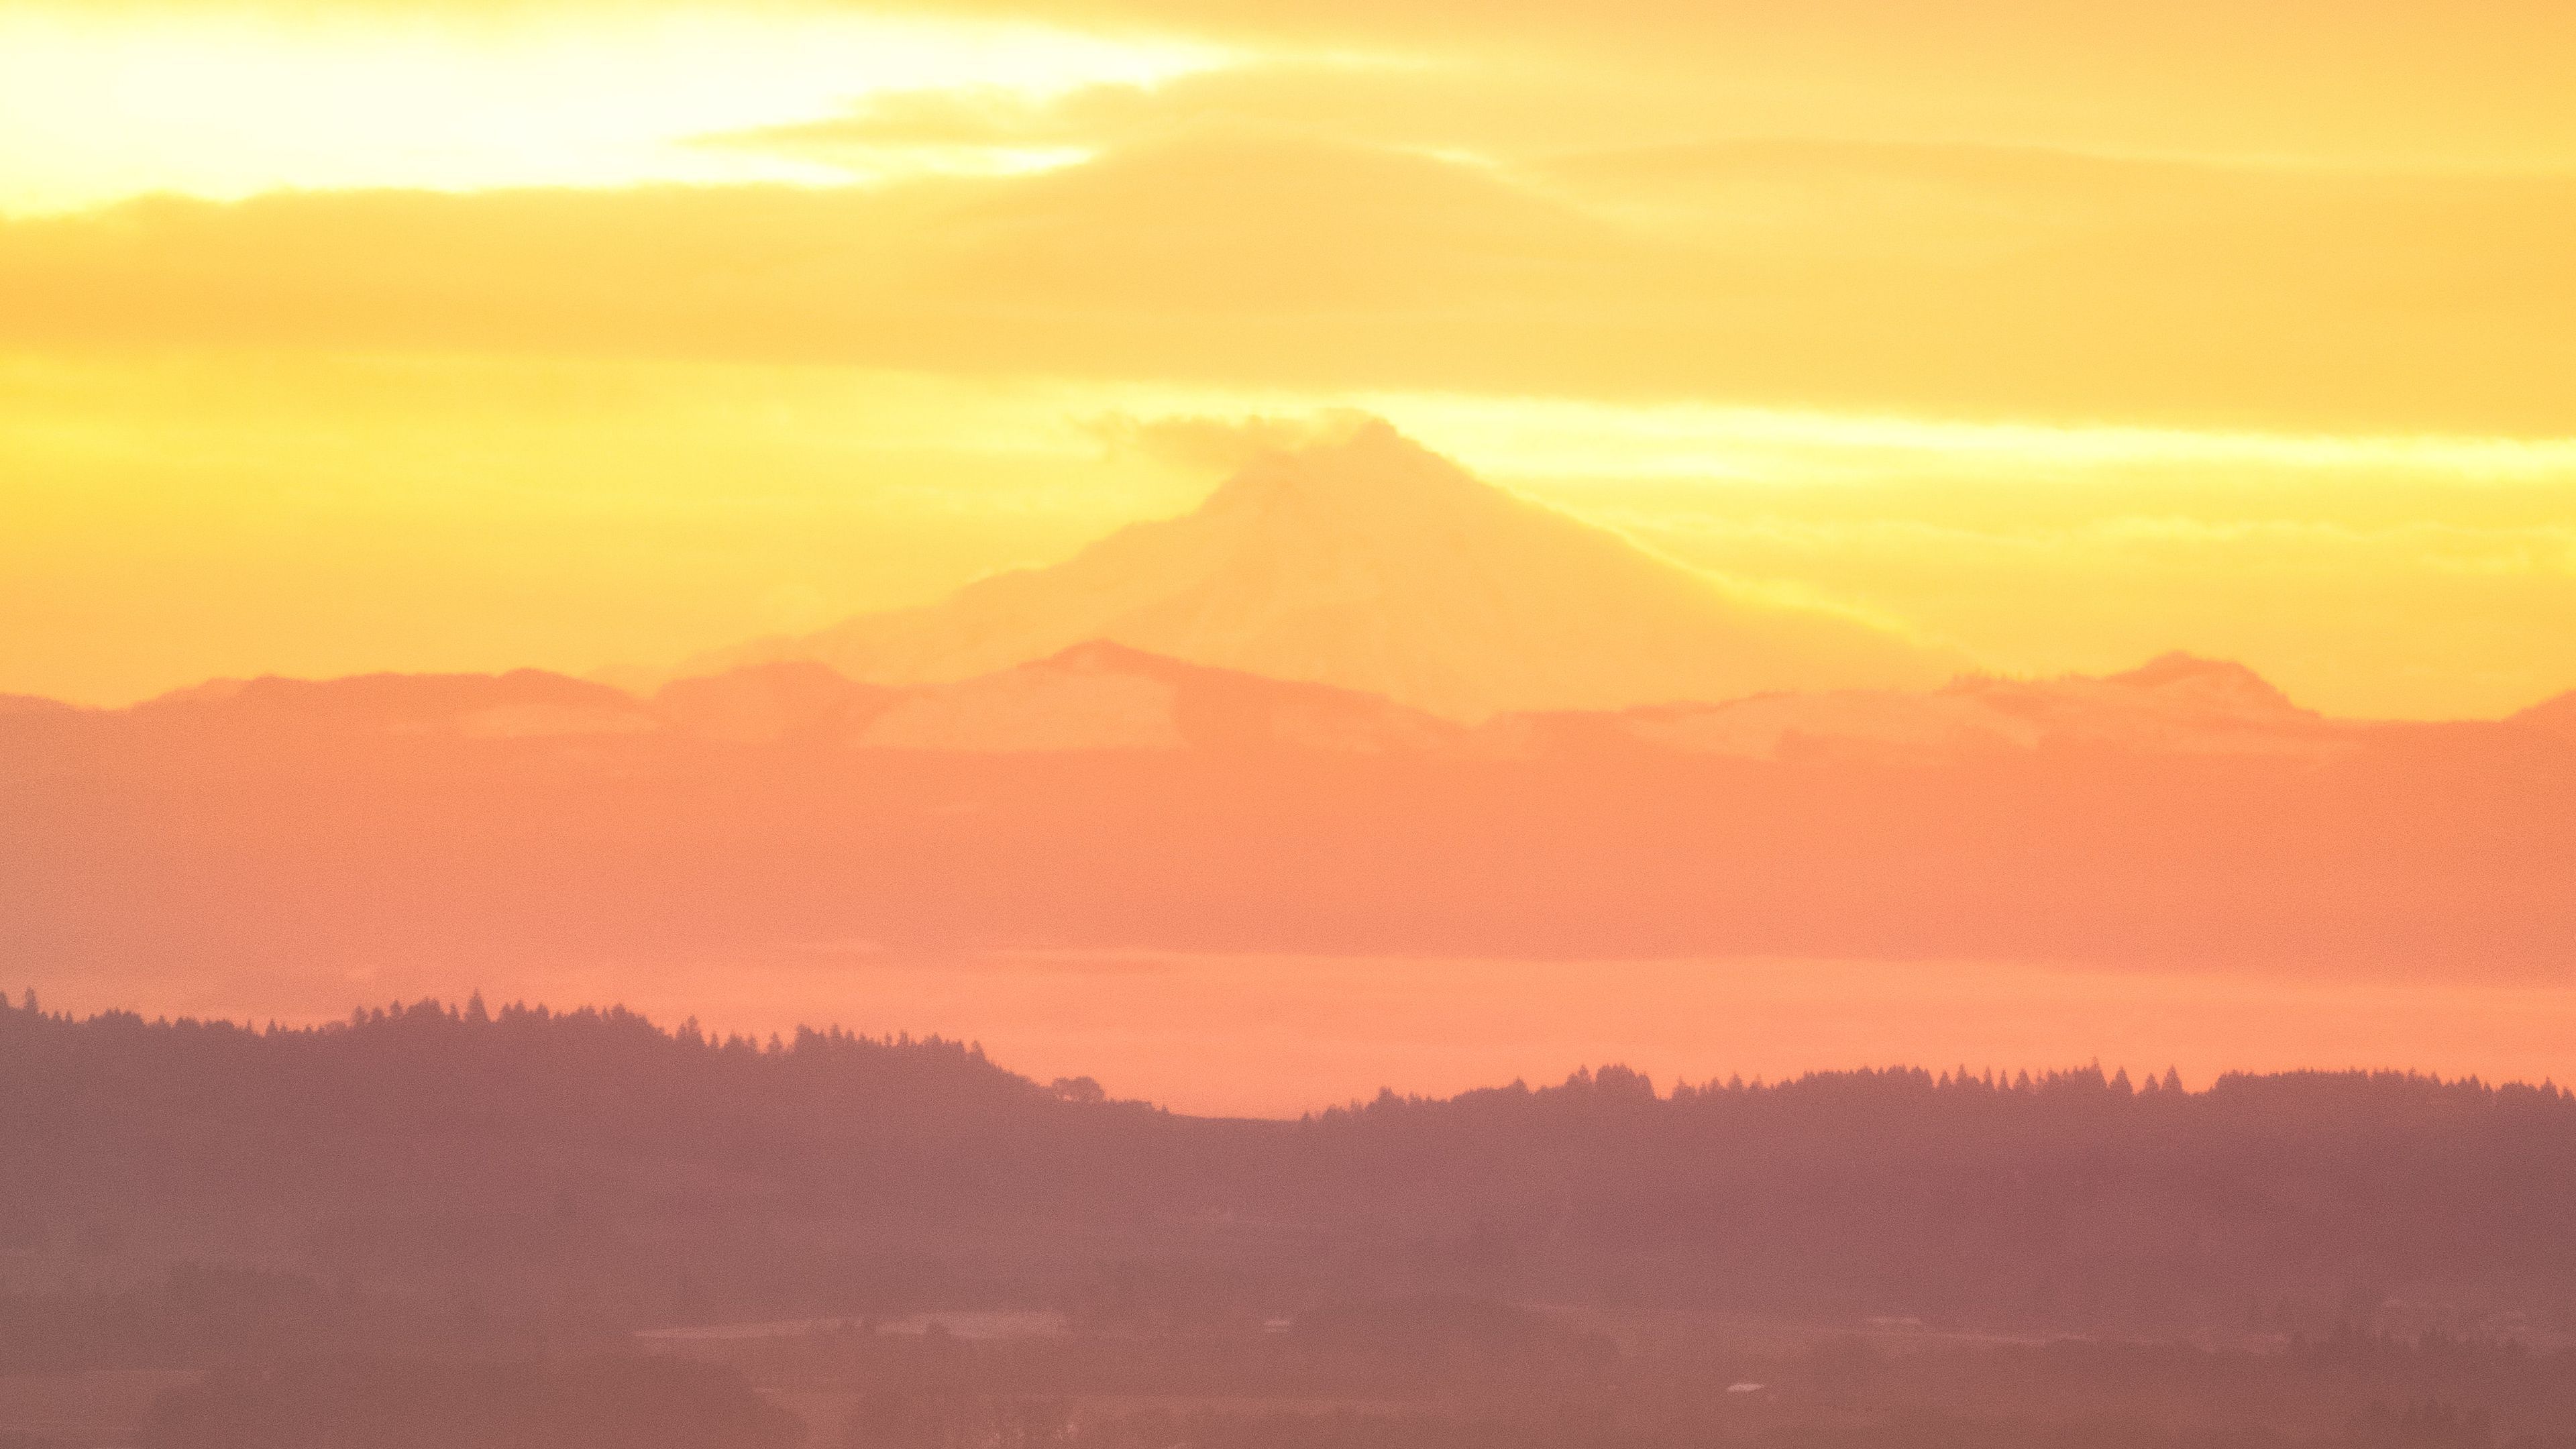 Download wallpaper 3840x2160 volcano, mountains, hilltop, sunset 4k uhd 16:9 HD background